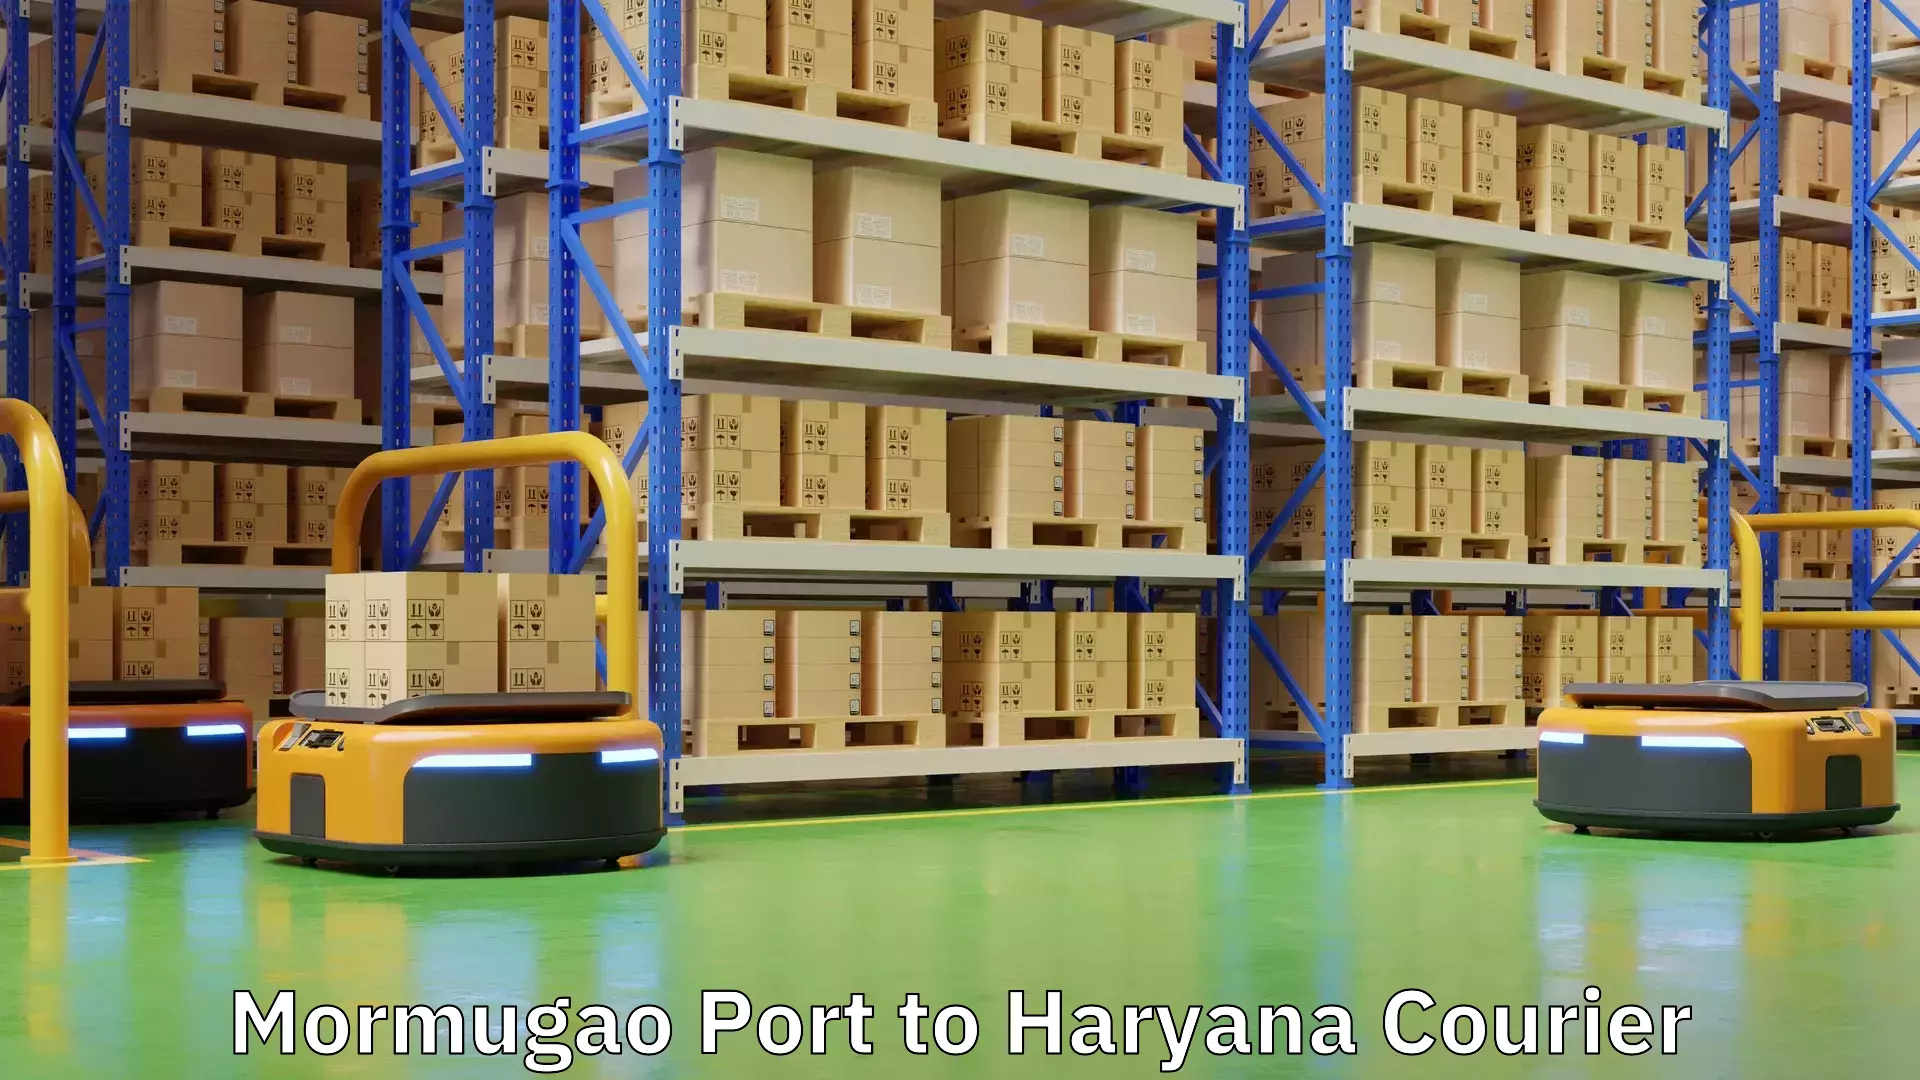 Reliable delivery network Mormugao Port to Haryana